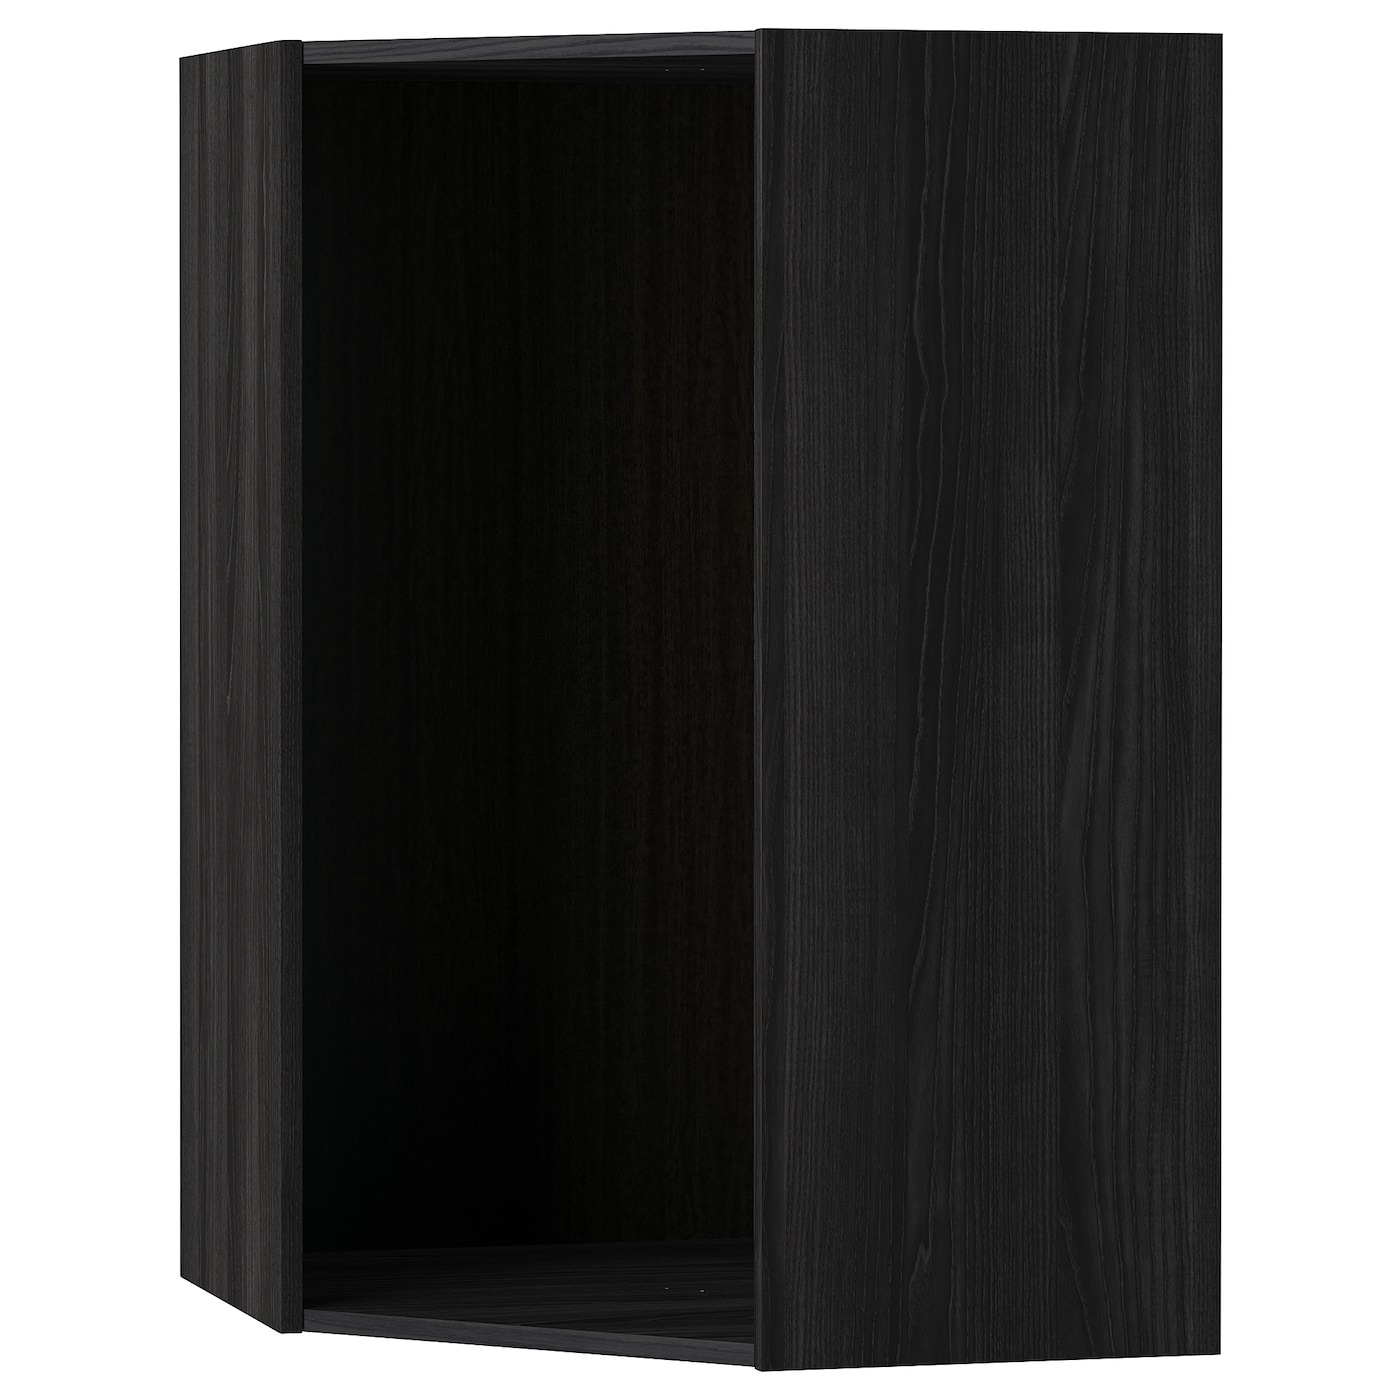 Каркас углового навесного шкафа - METOD IKEA/МЕТОД ИКЕА, 100х67,5 см, черный